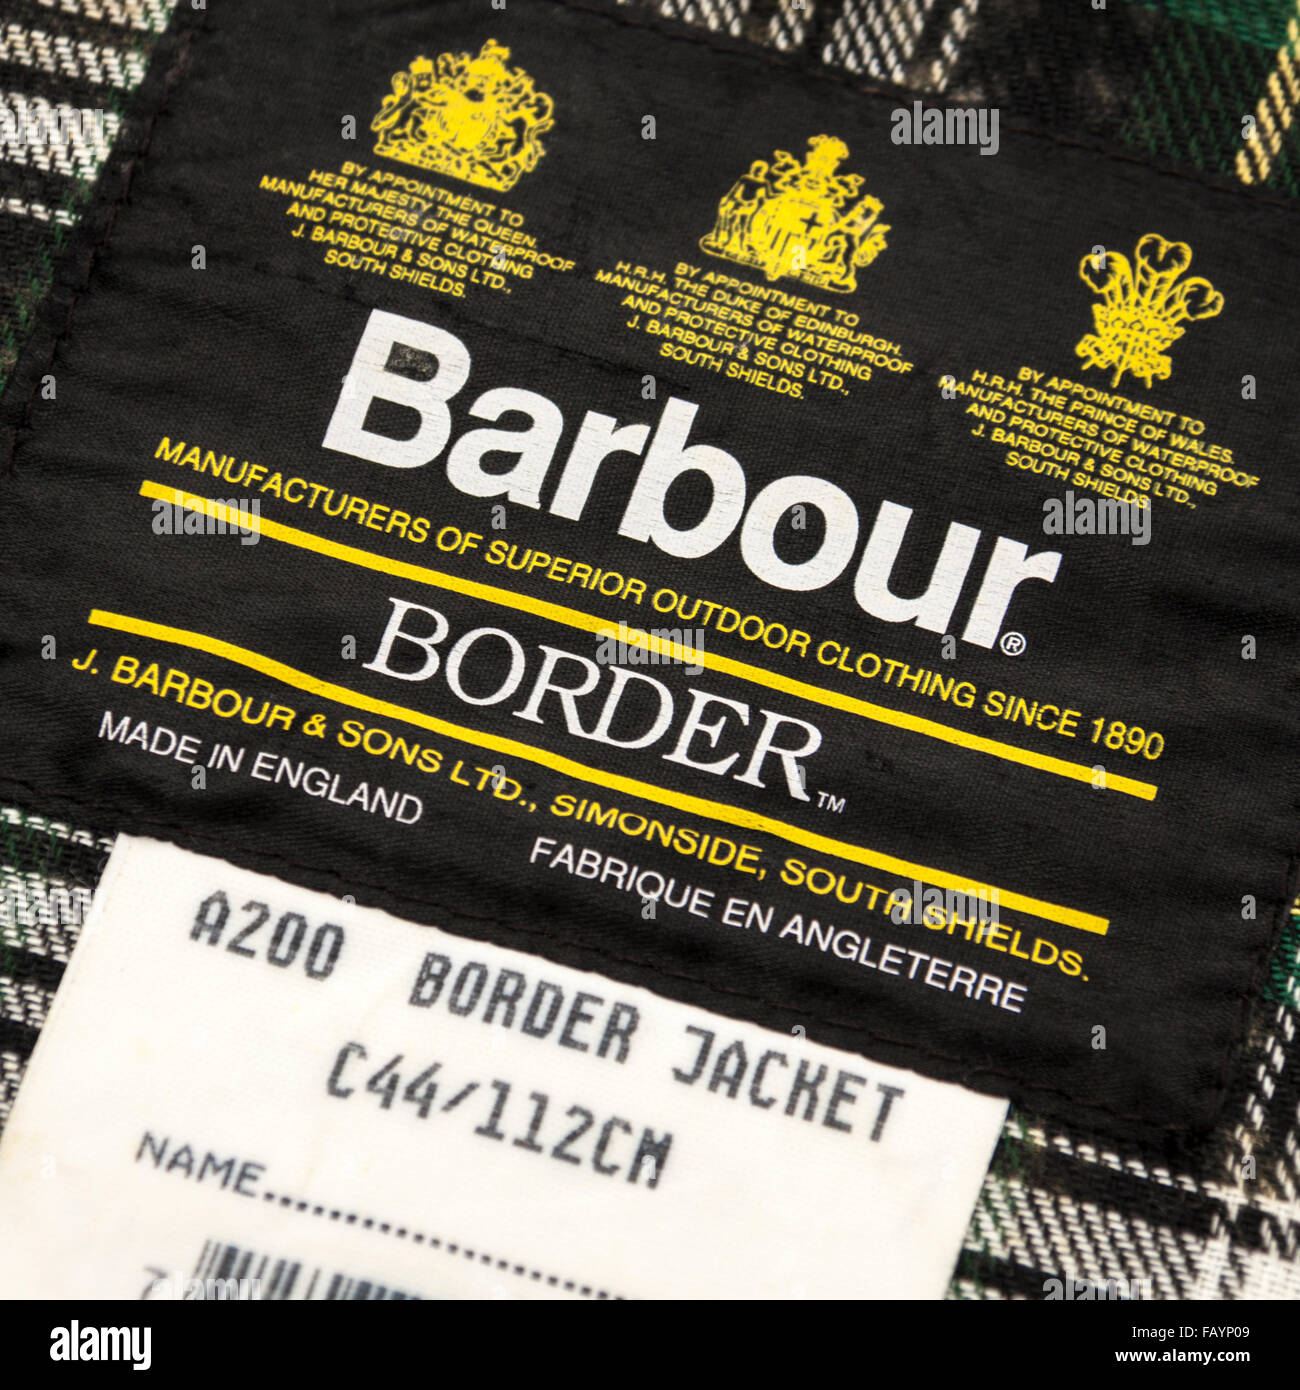 J Barbour & Sons Ltd Online Sale, UP TO 53% OFF